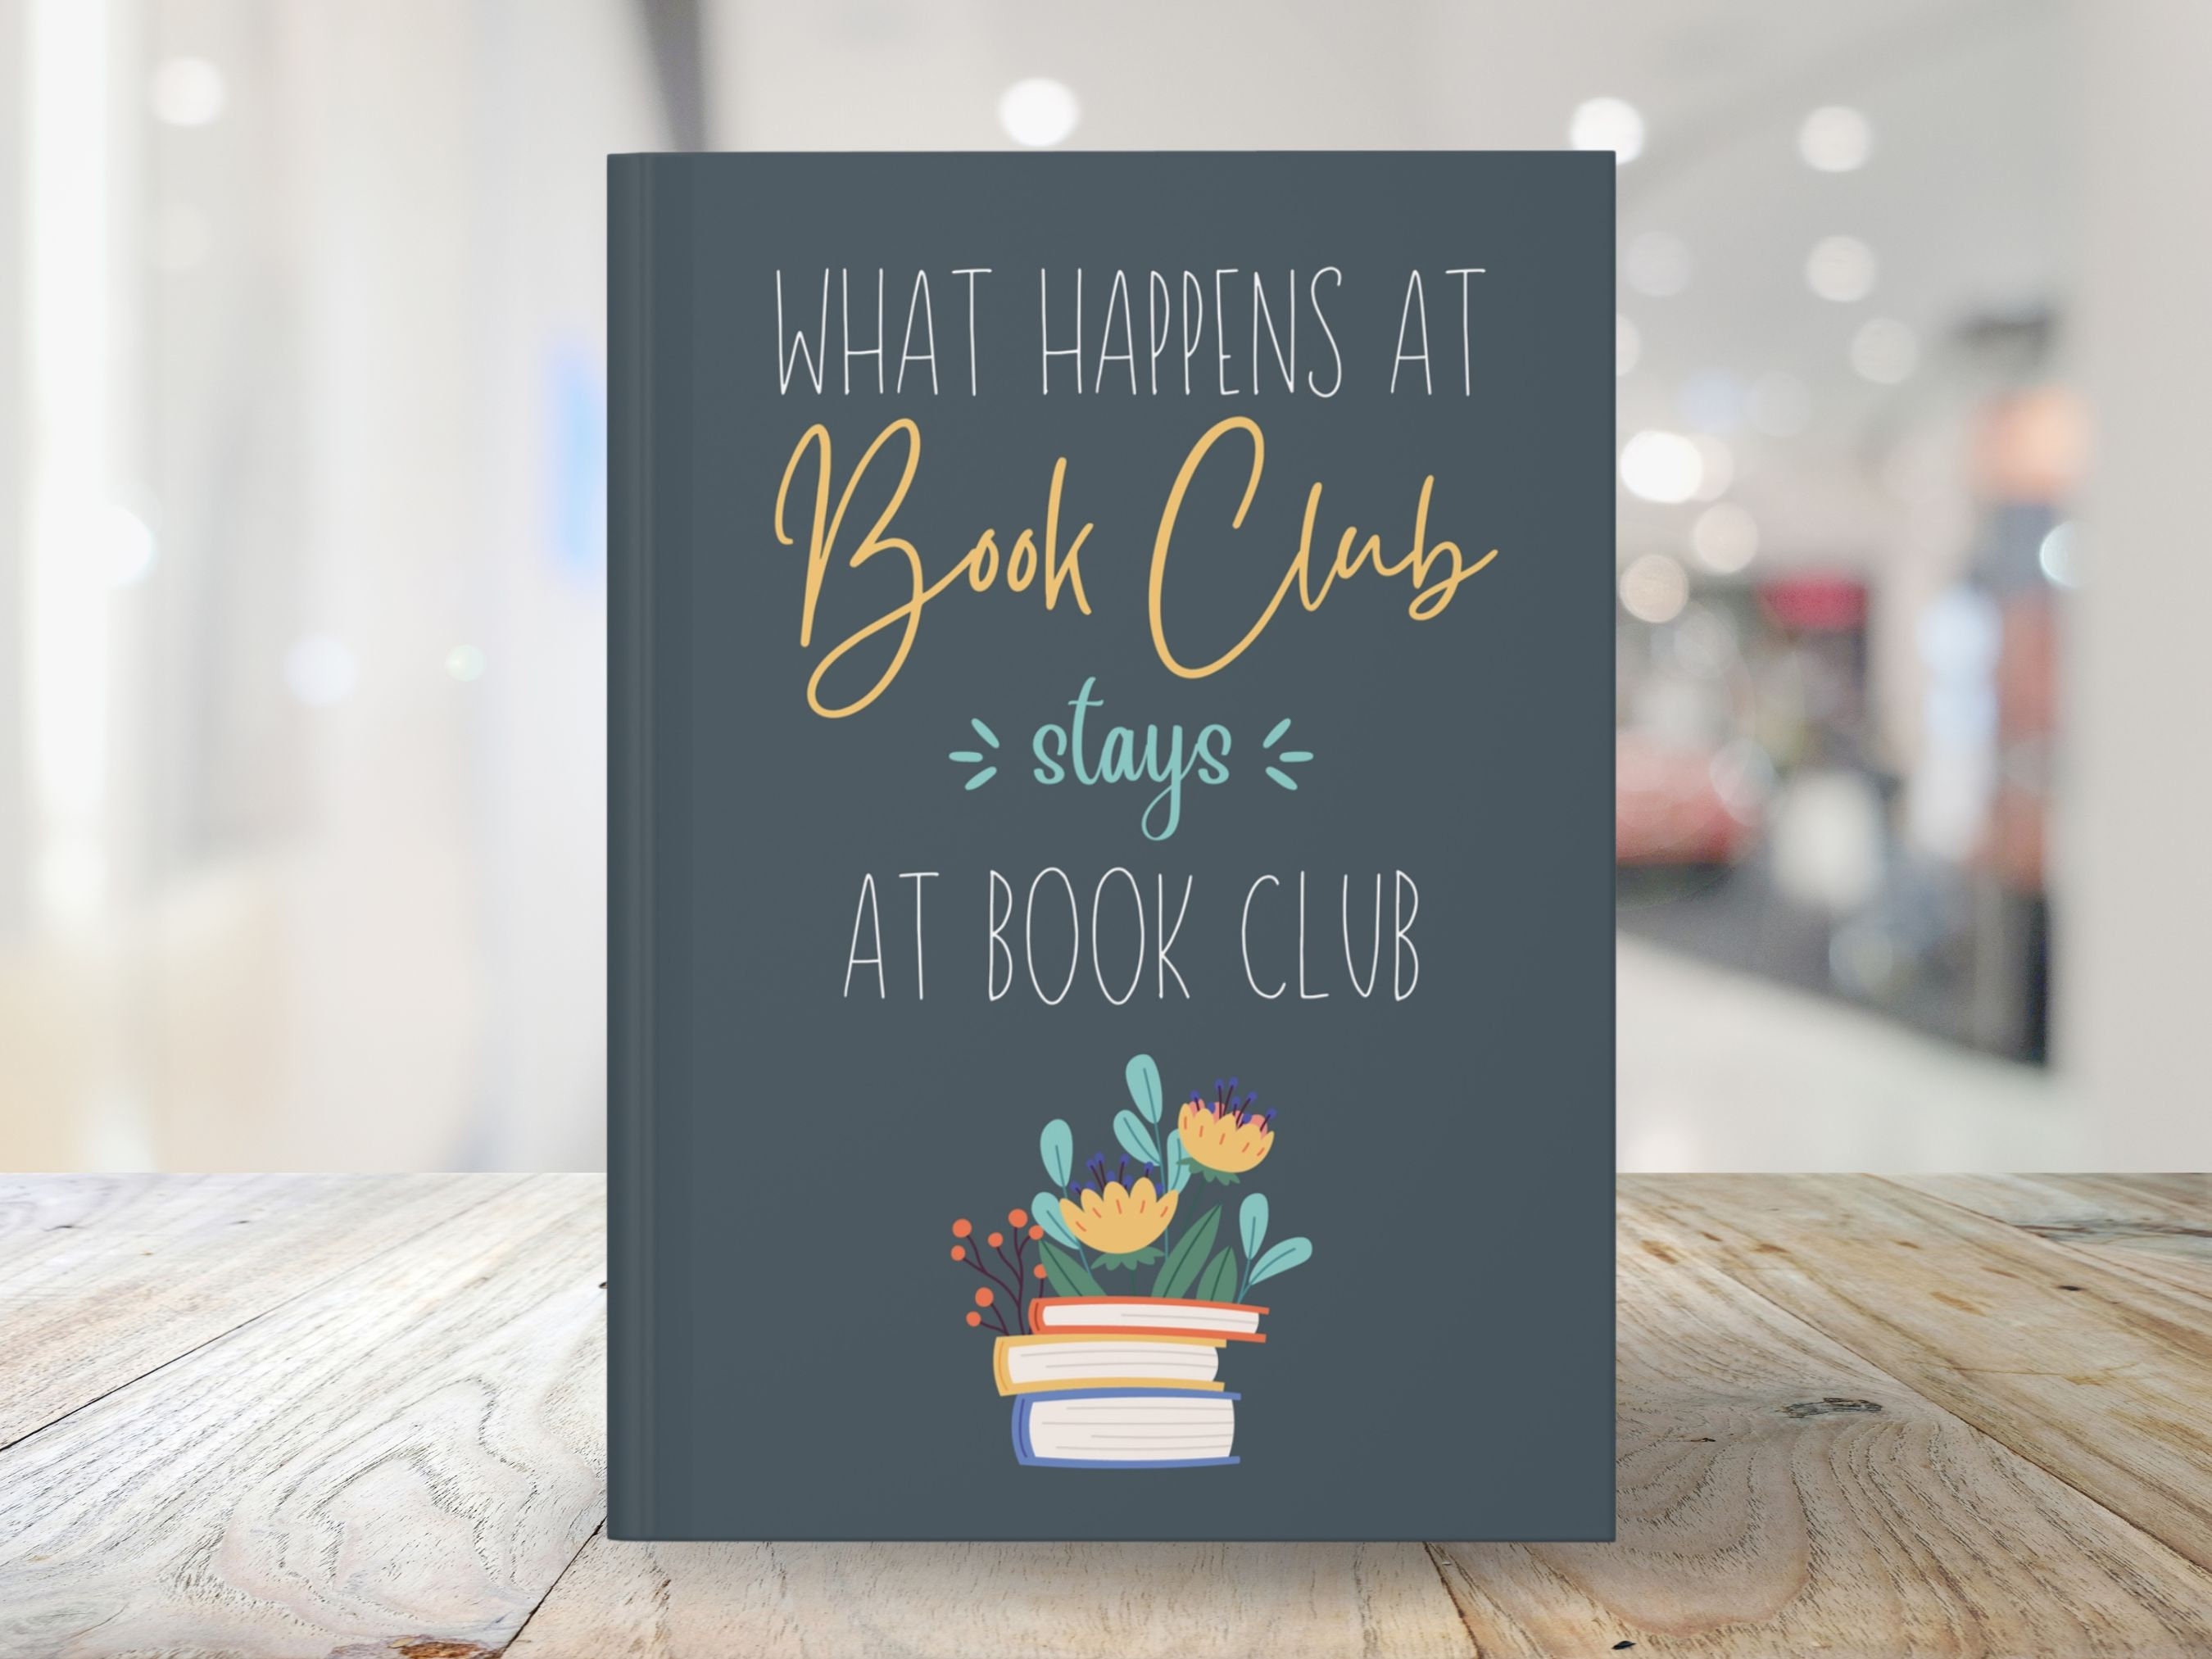 Book Club Journal, Book Club Log, Reading Journal, Reading, Book